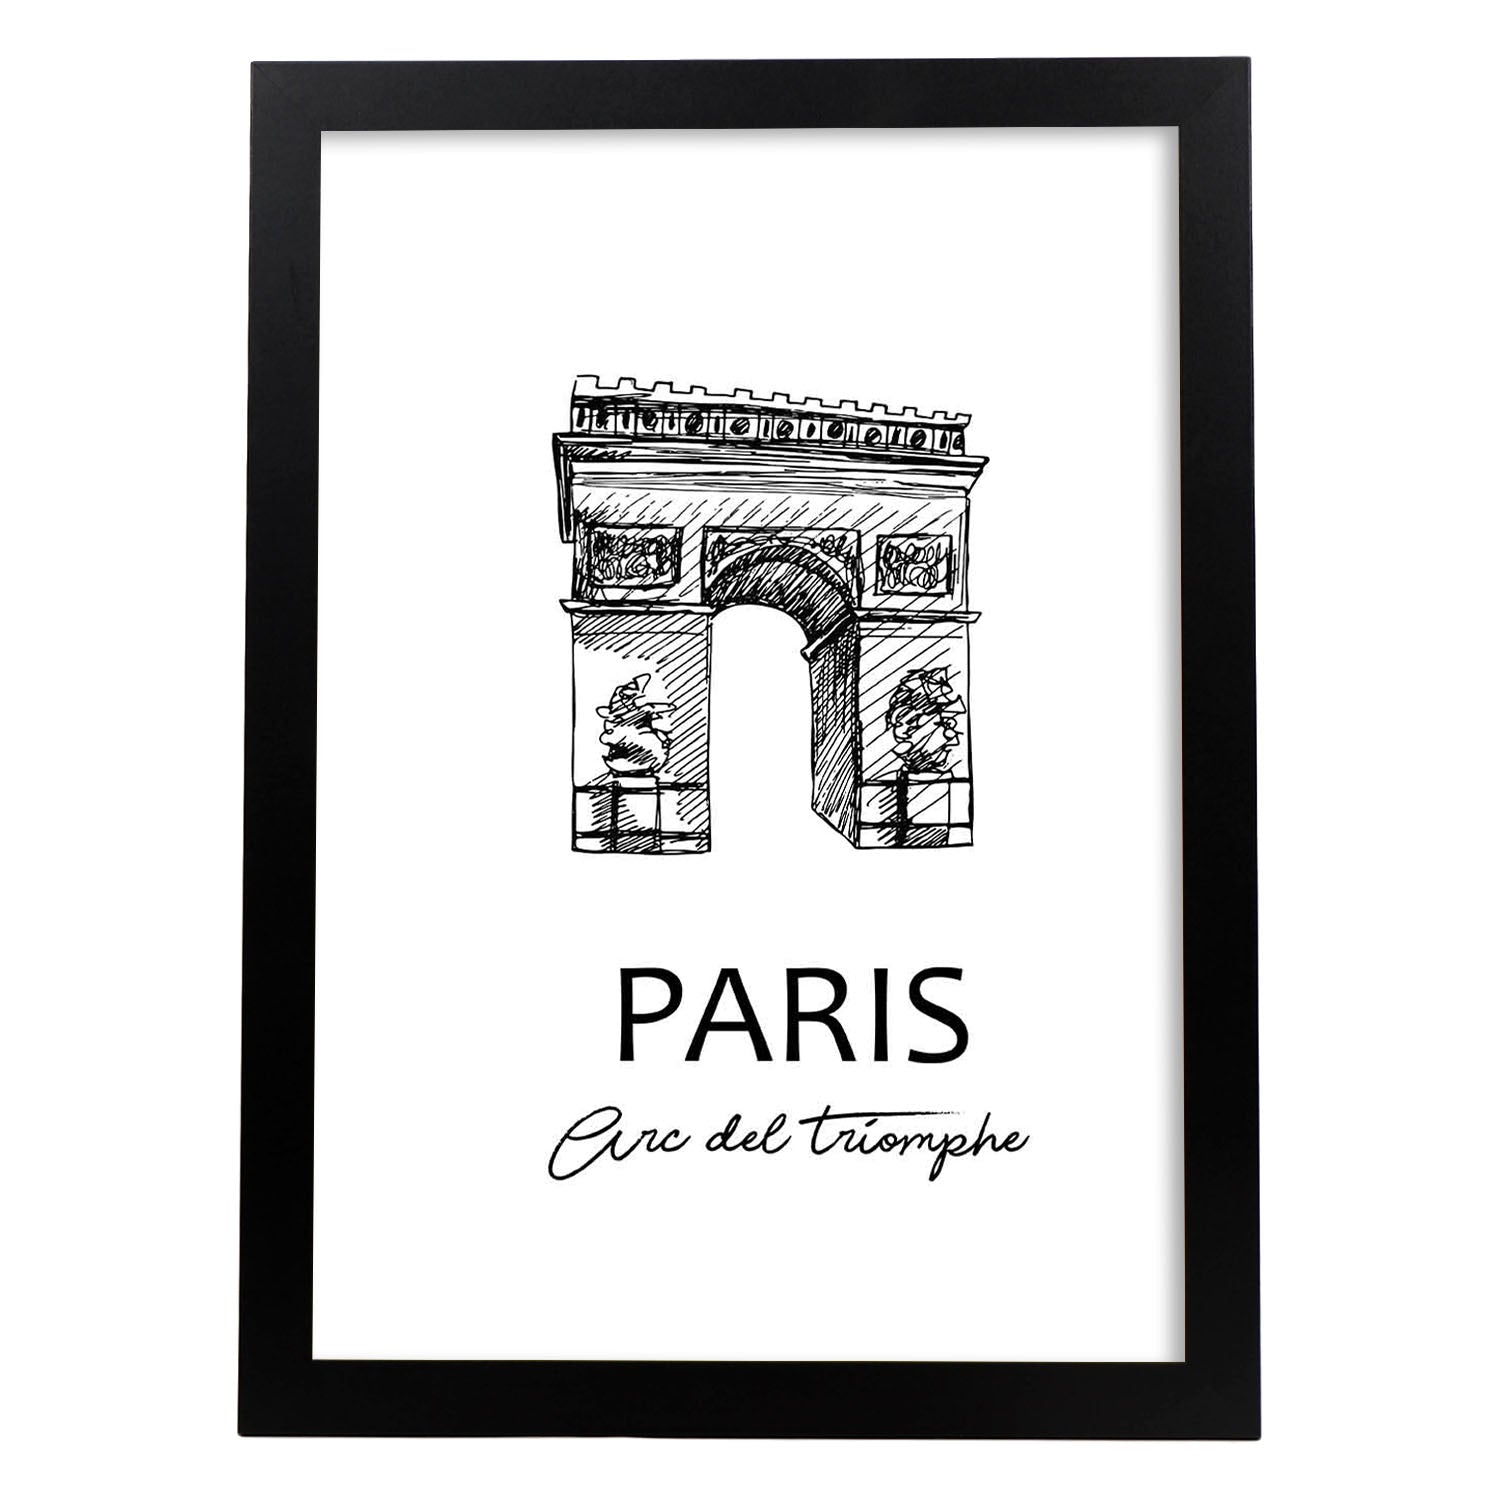 Poster de Paris -Arco del triunfo. Láminas con monumentos de ciudades.-Artwork-Nacnic-A4-Marco Negro-Nacnic Estudio SL